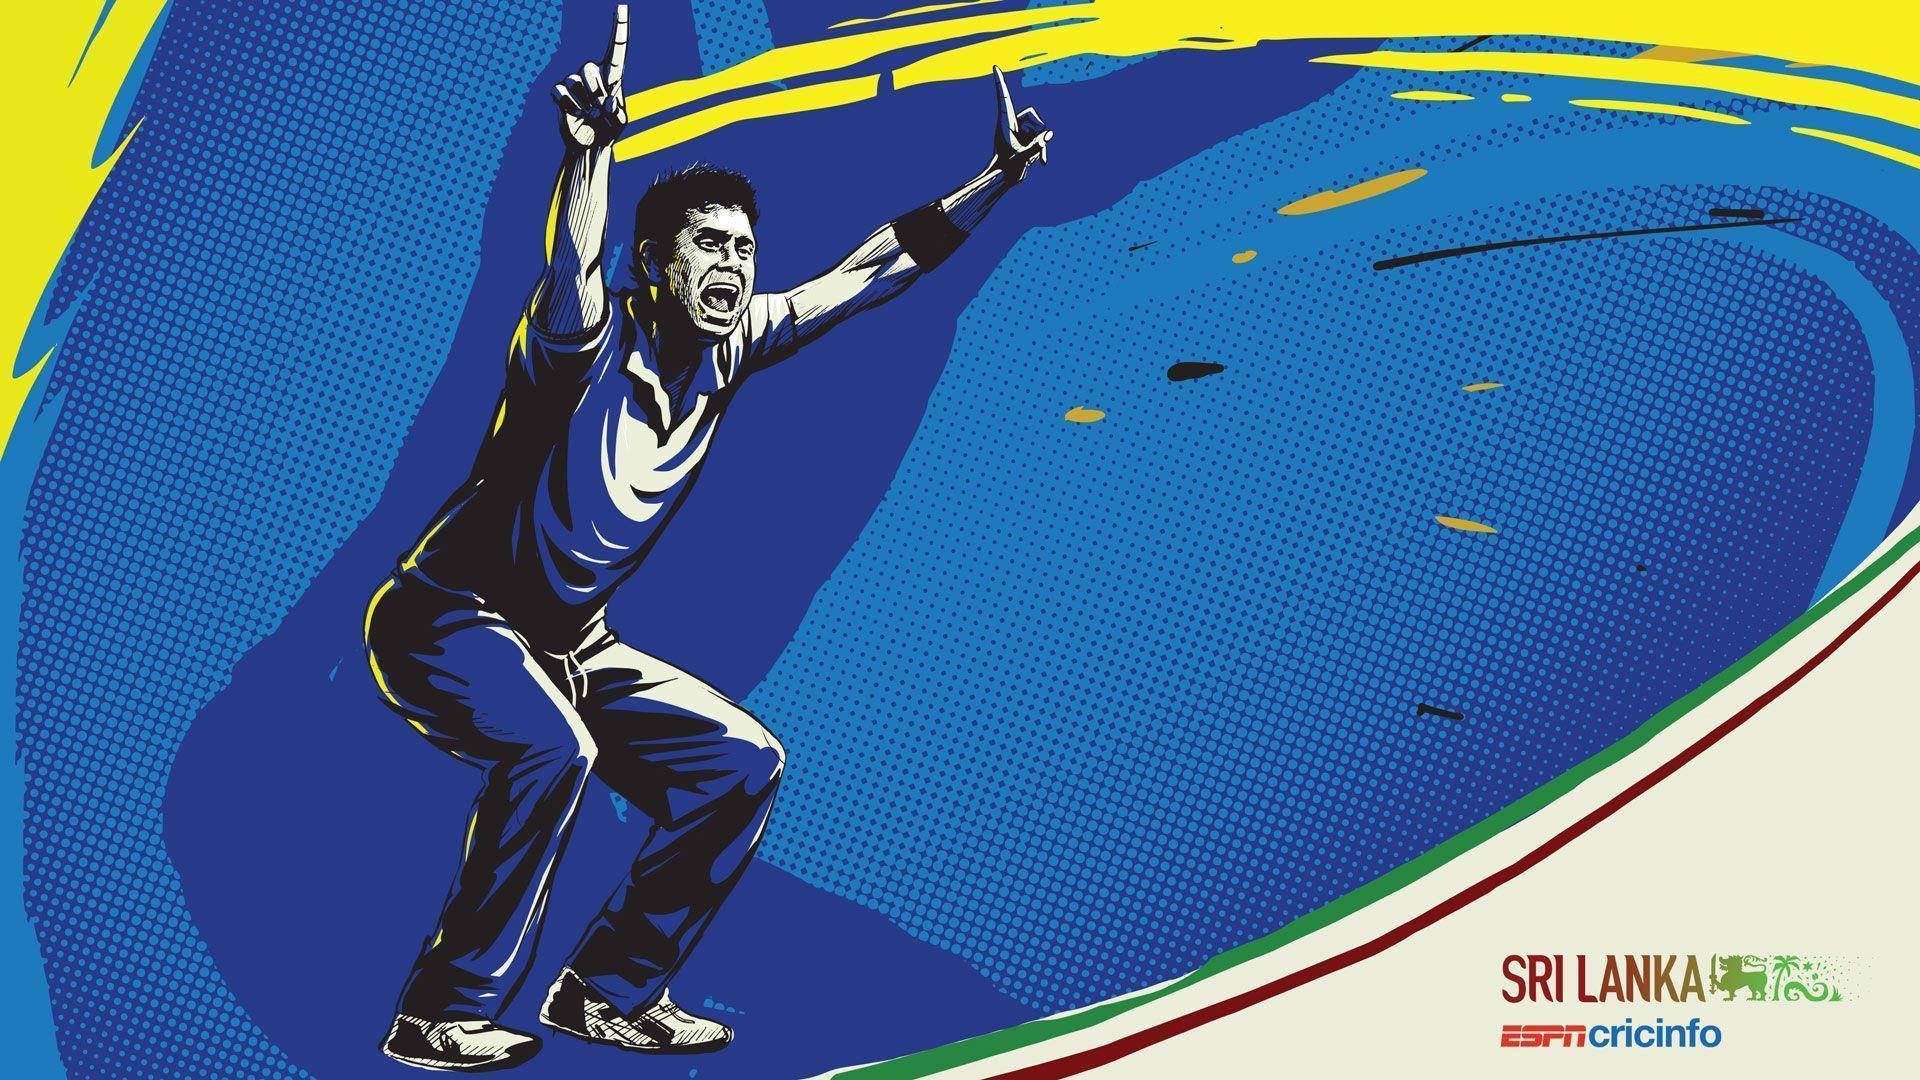 Download Sri Lanka Cricket Poster Wallpaper